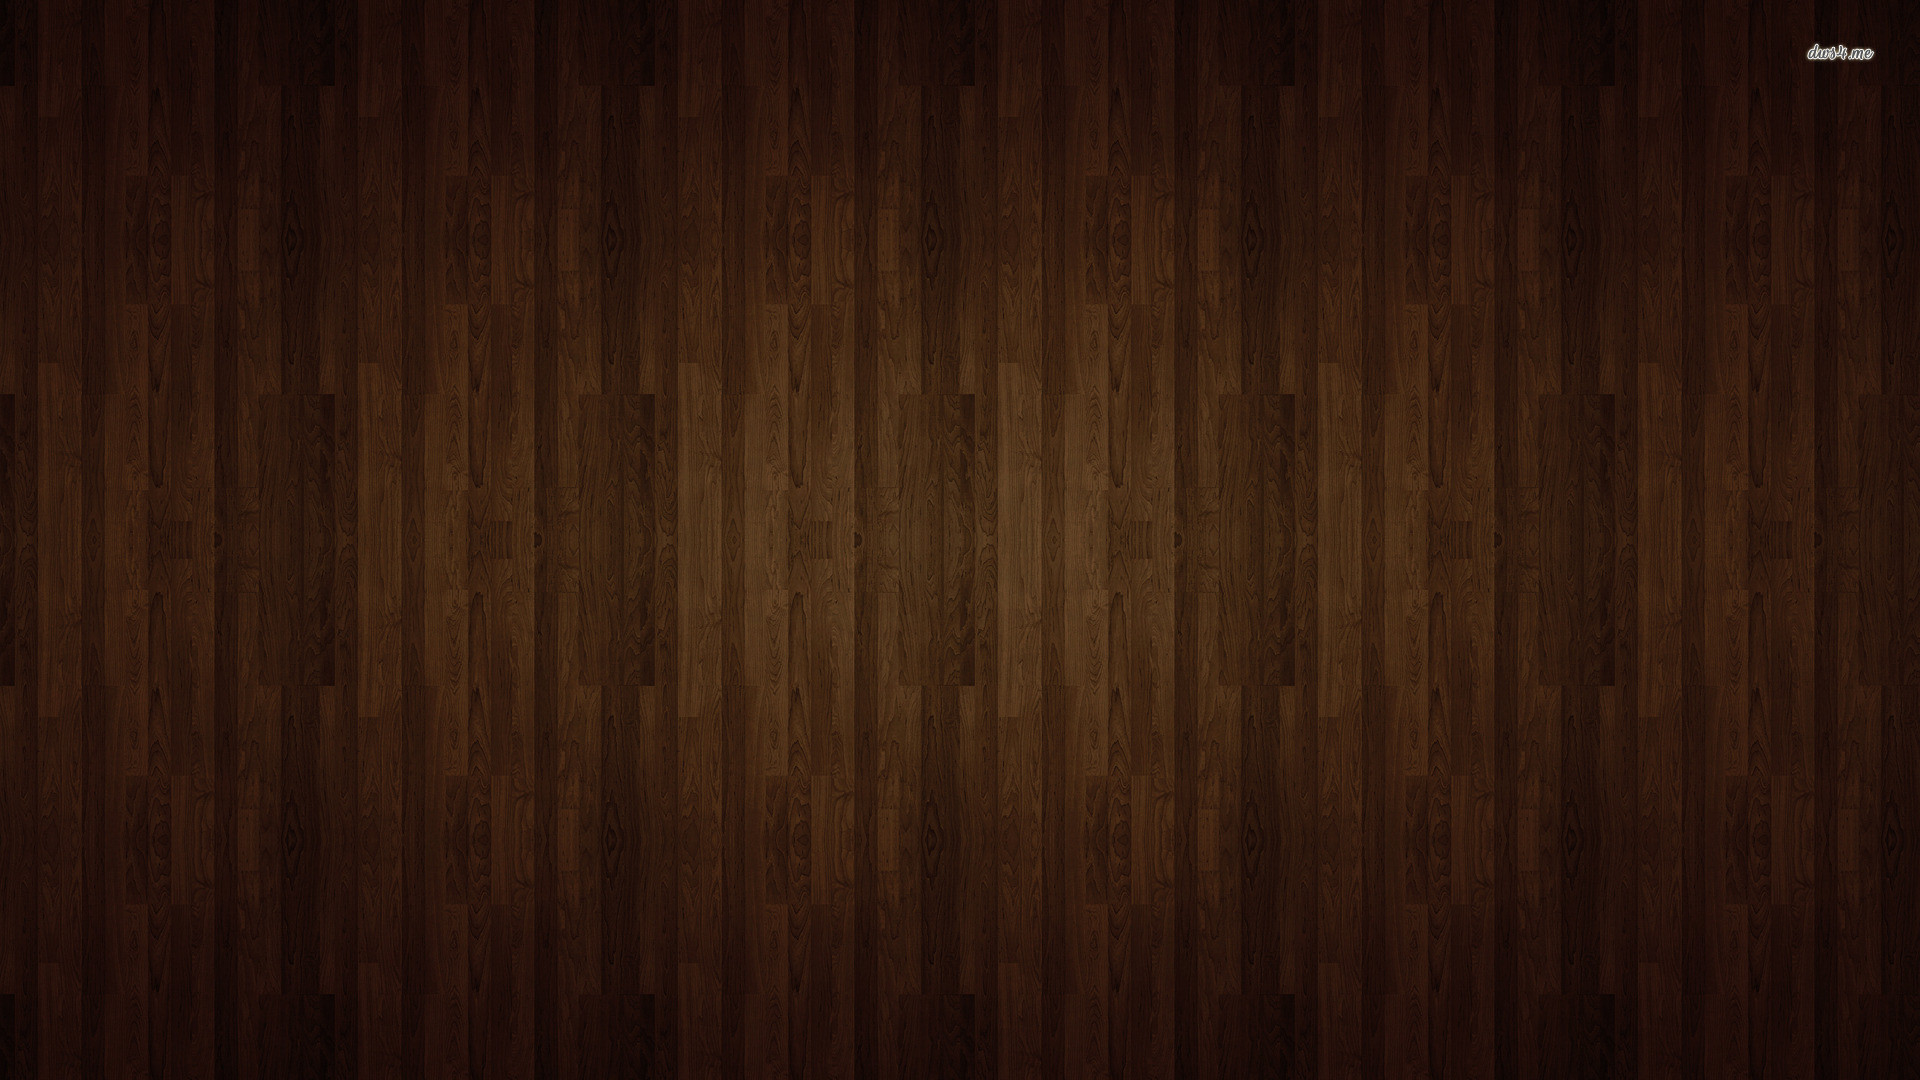 1920x1080, Modern Style Hardwood Flooring Wallpaper - Wood Floor - HD Wallpaper 